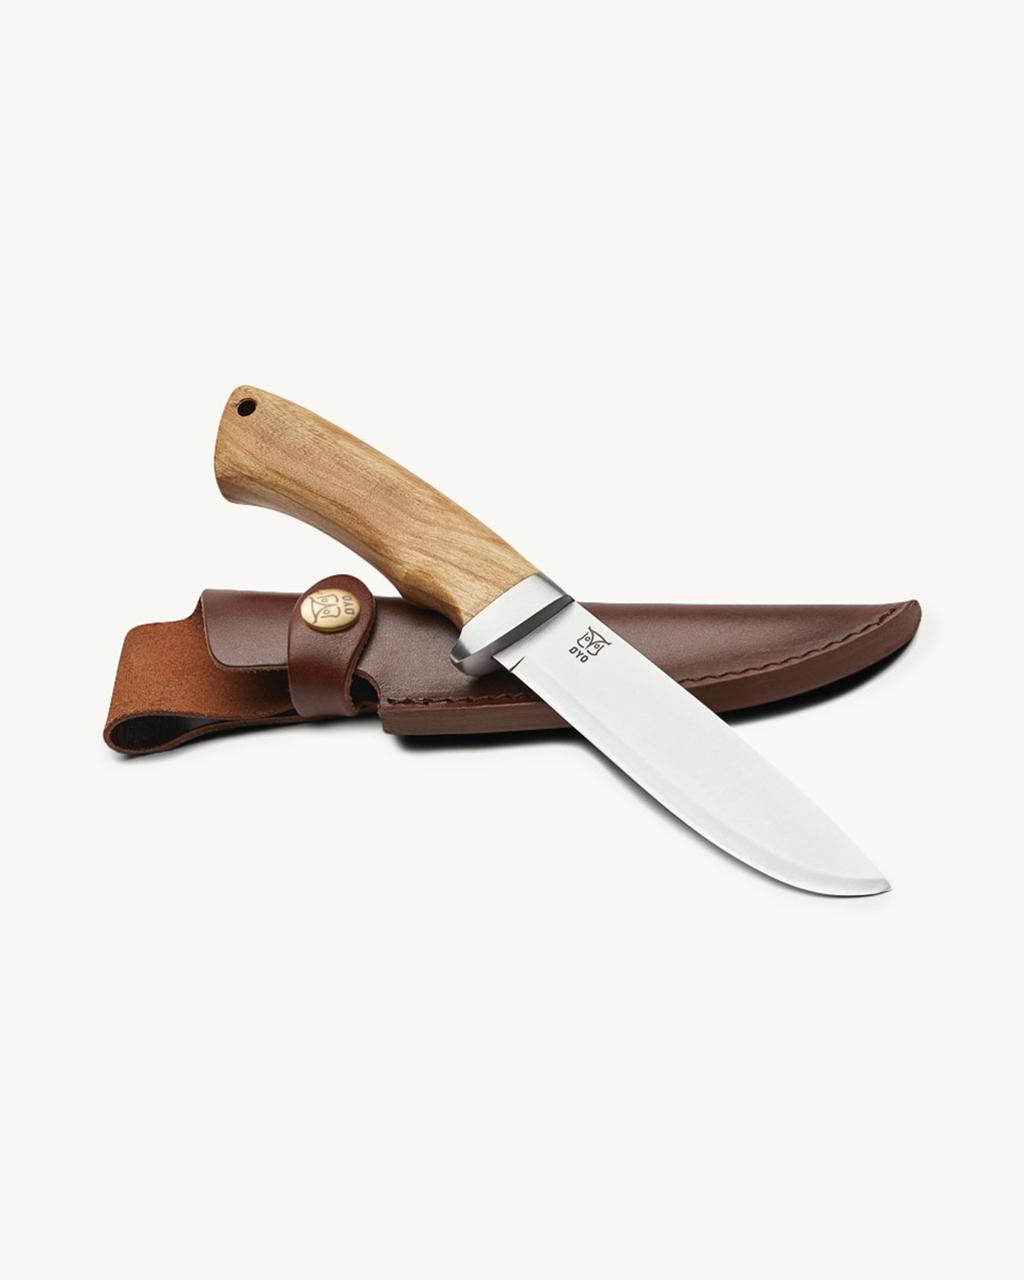 Rondane knife w/leather sheath